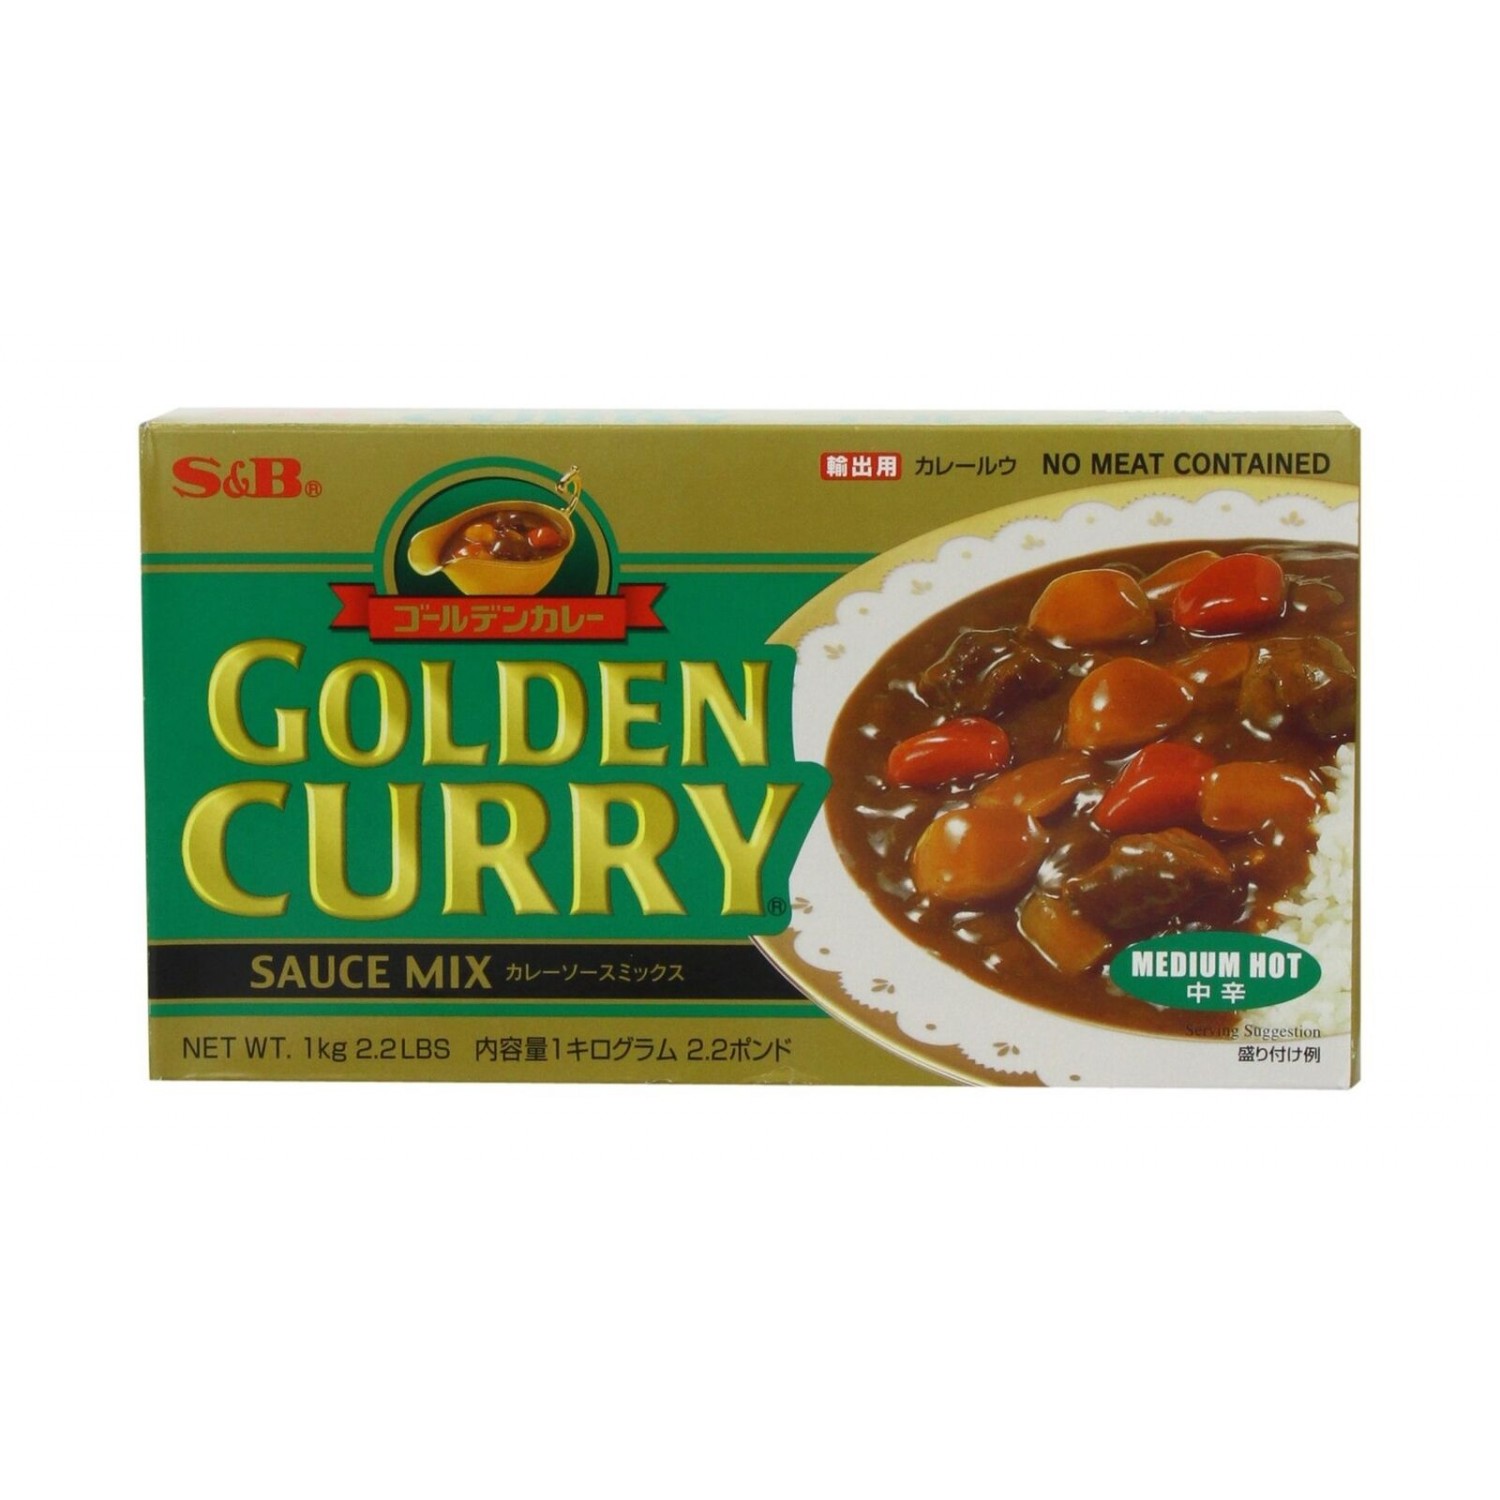 S&B Golden Curry 1kg Japanese Curry Mix Medium Hot